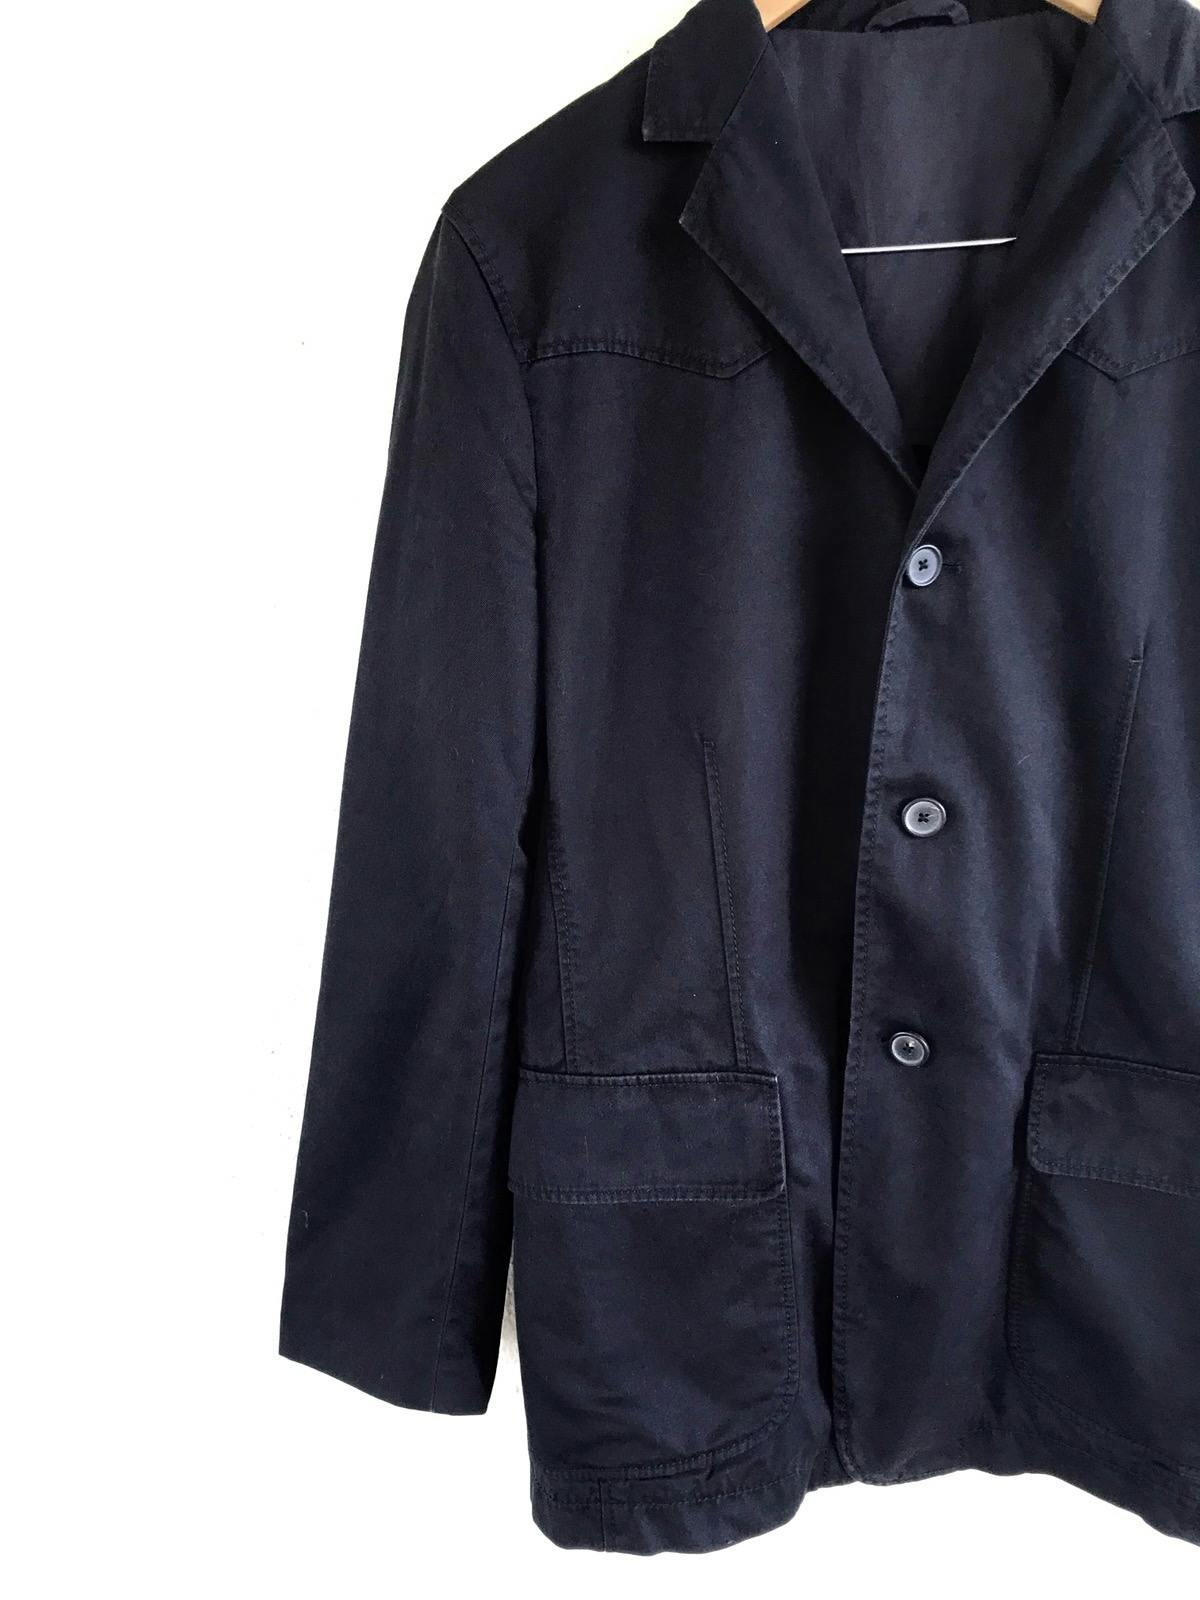 Jil Sander Black Jacket Blazer Made in Italy - 3